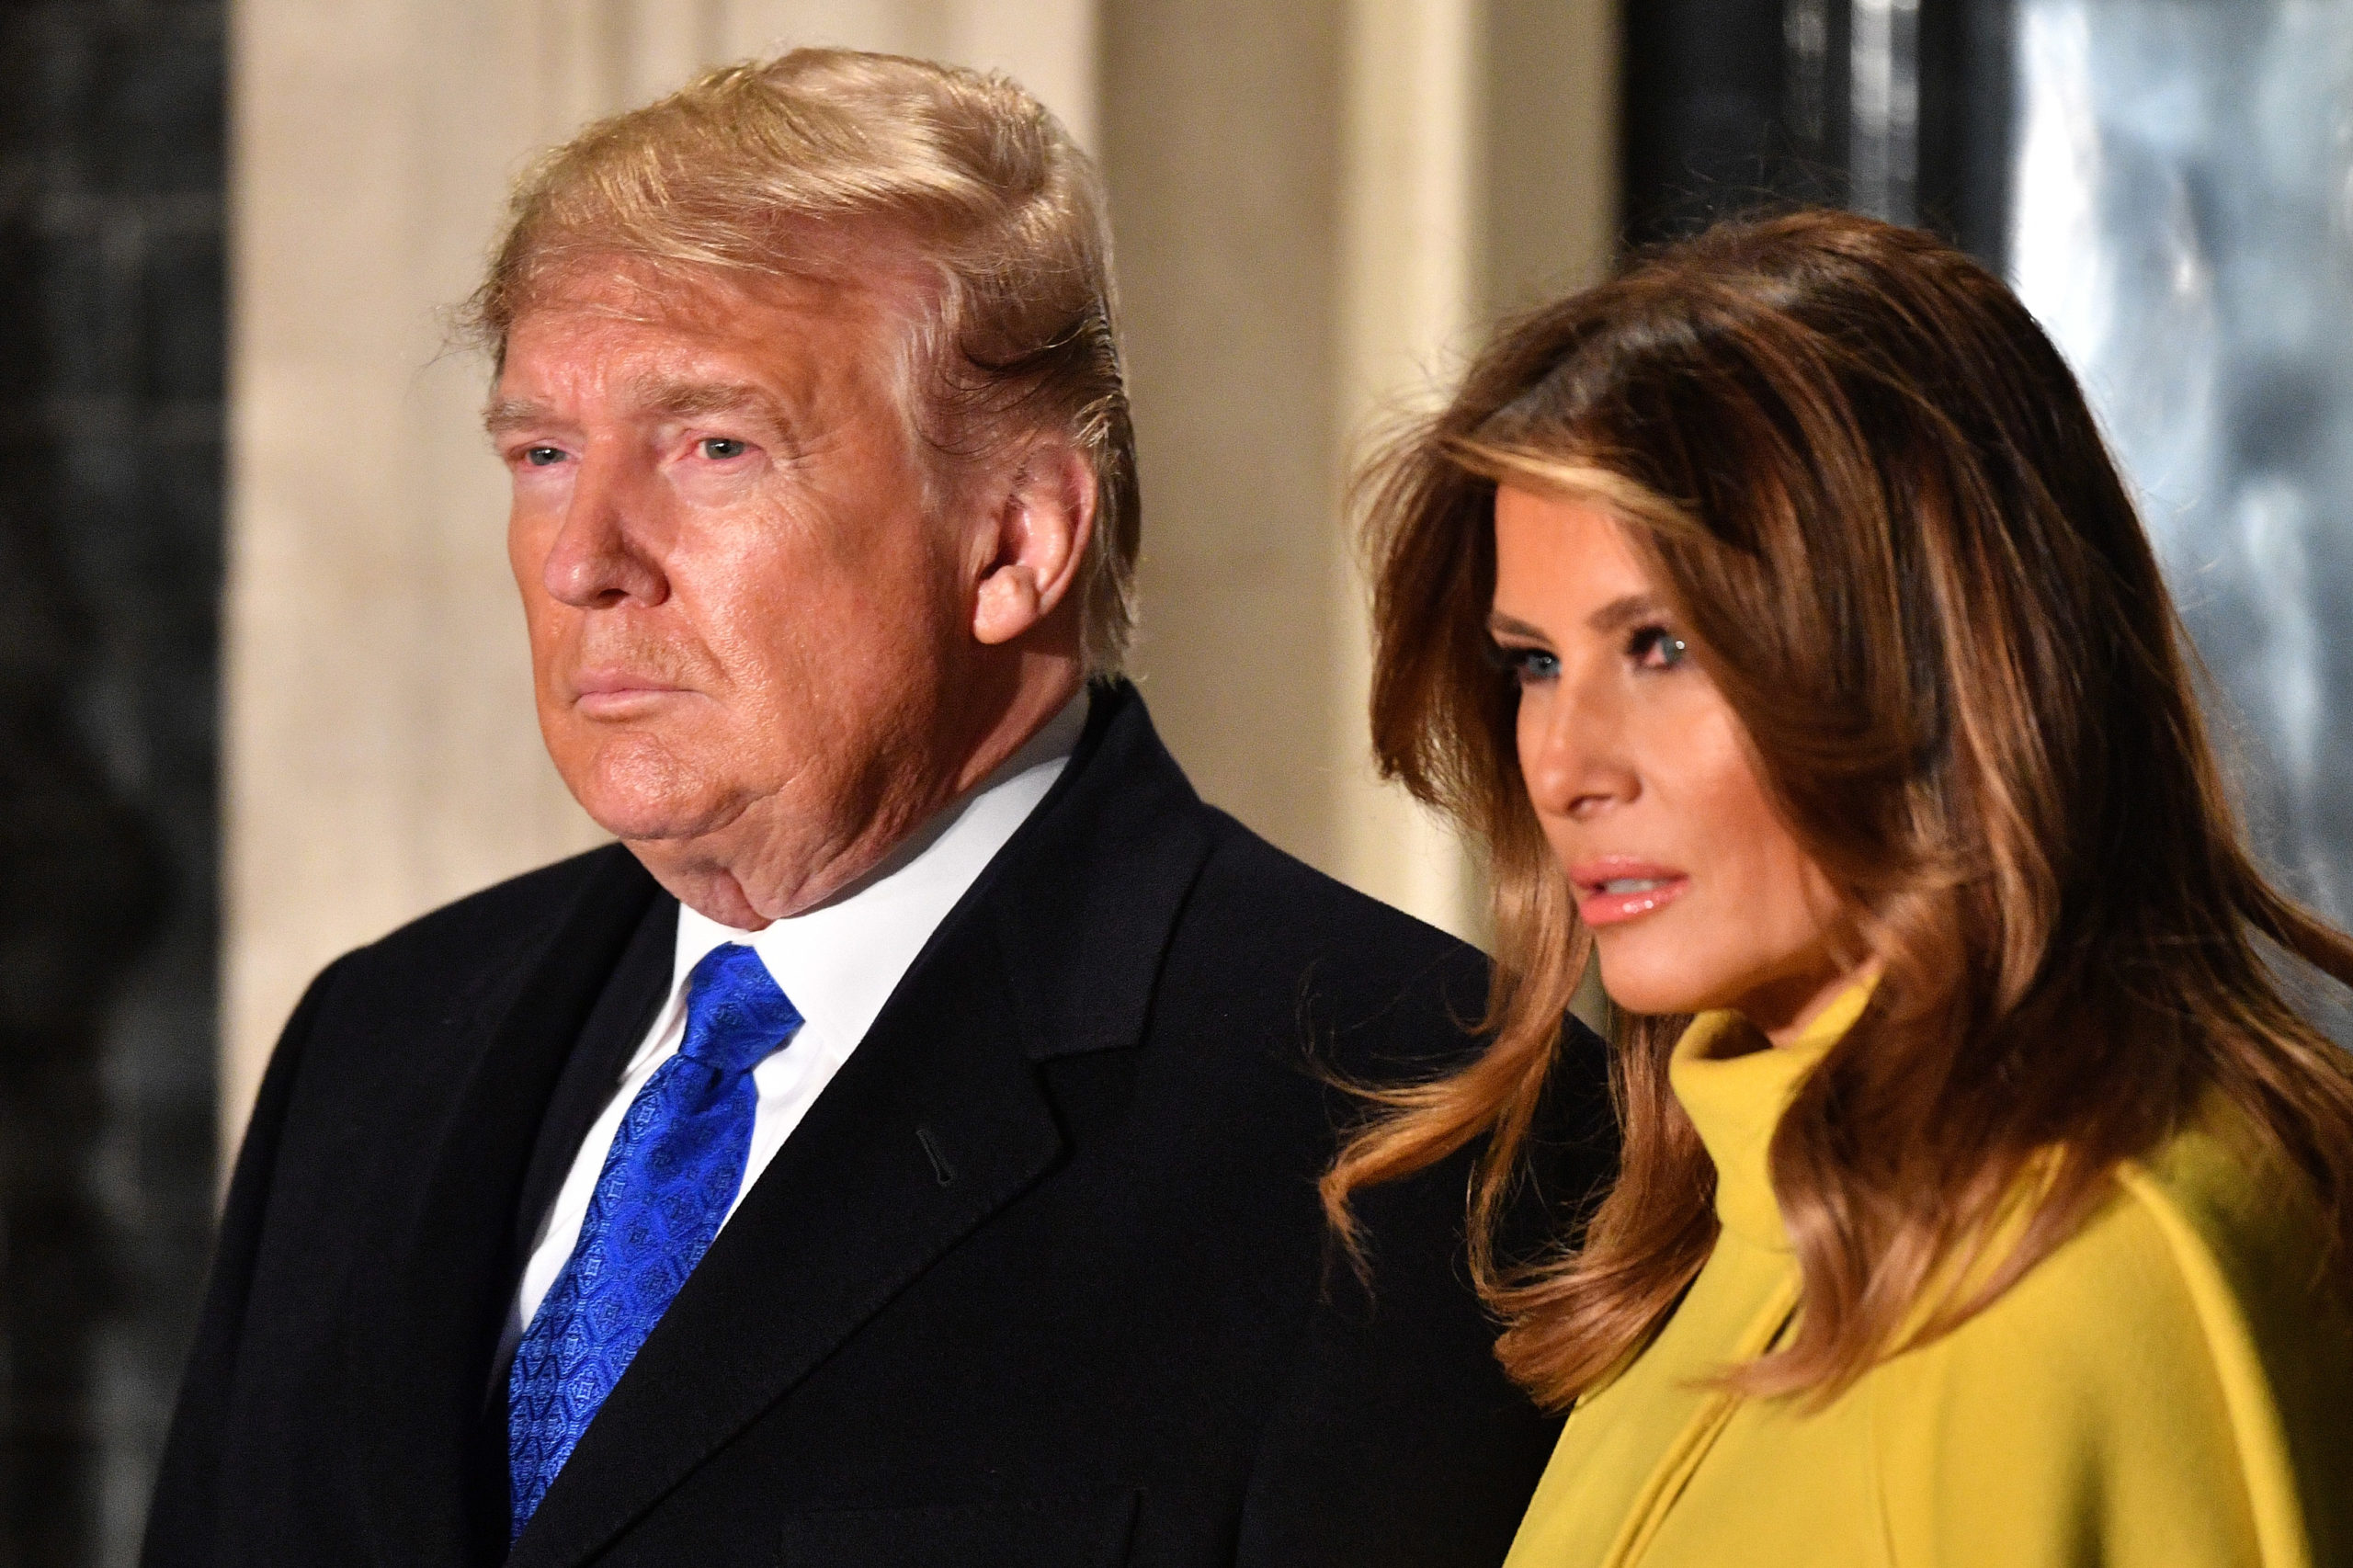 Donald and Melania Trump look very serious.